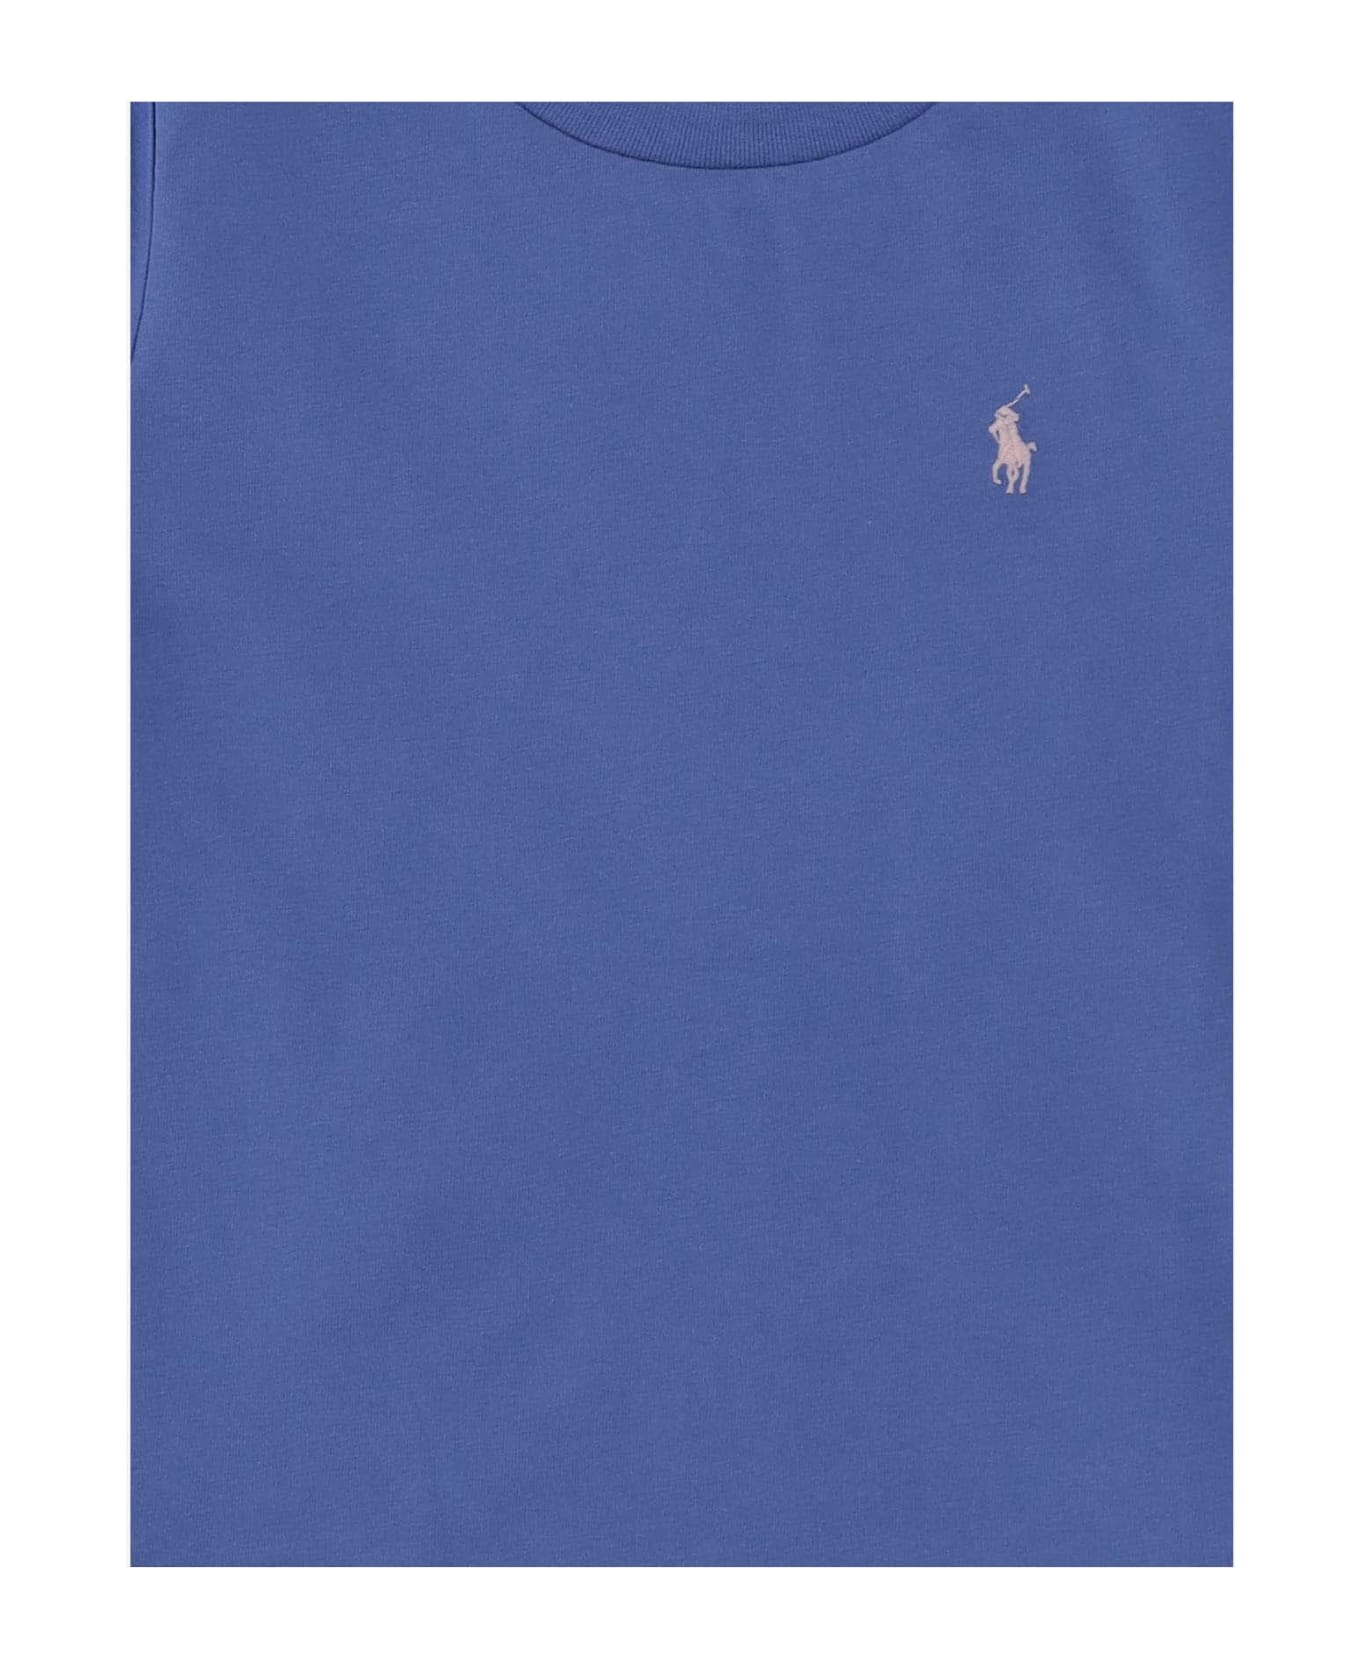 Polo Ralph Lauren Cotton T-shirt With Logo - Blue